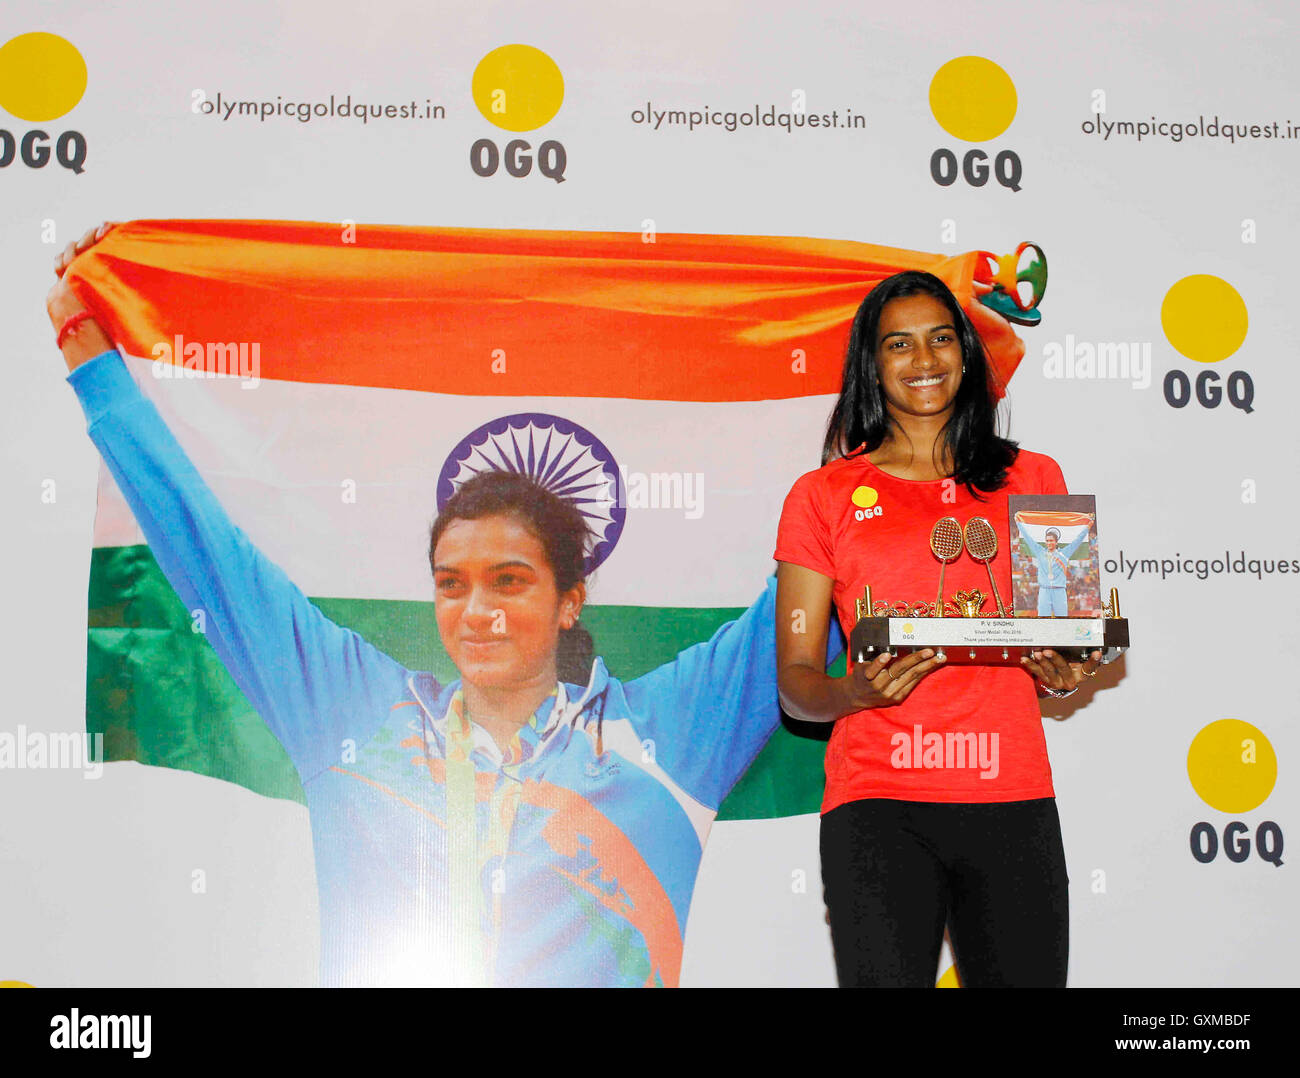 Indische Badmintonspielerin Rio Olympia-Silbermedaillengewinner P V Sindhu Glückwünsche Funktion organisiert Olympic Gold Quest-Mumbai Stockfoto